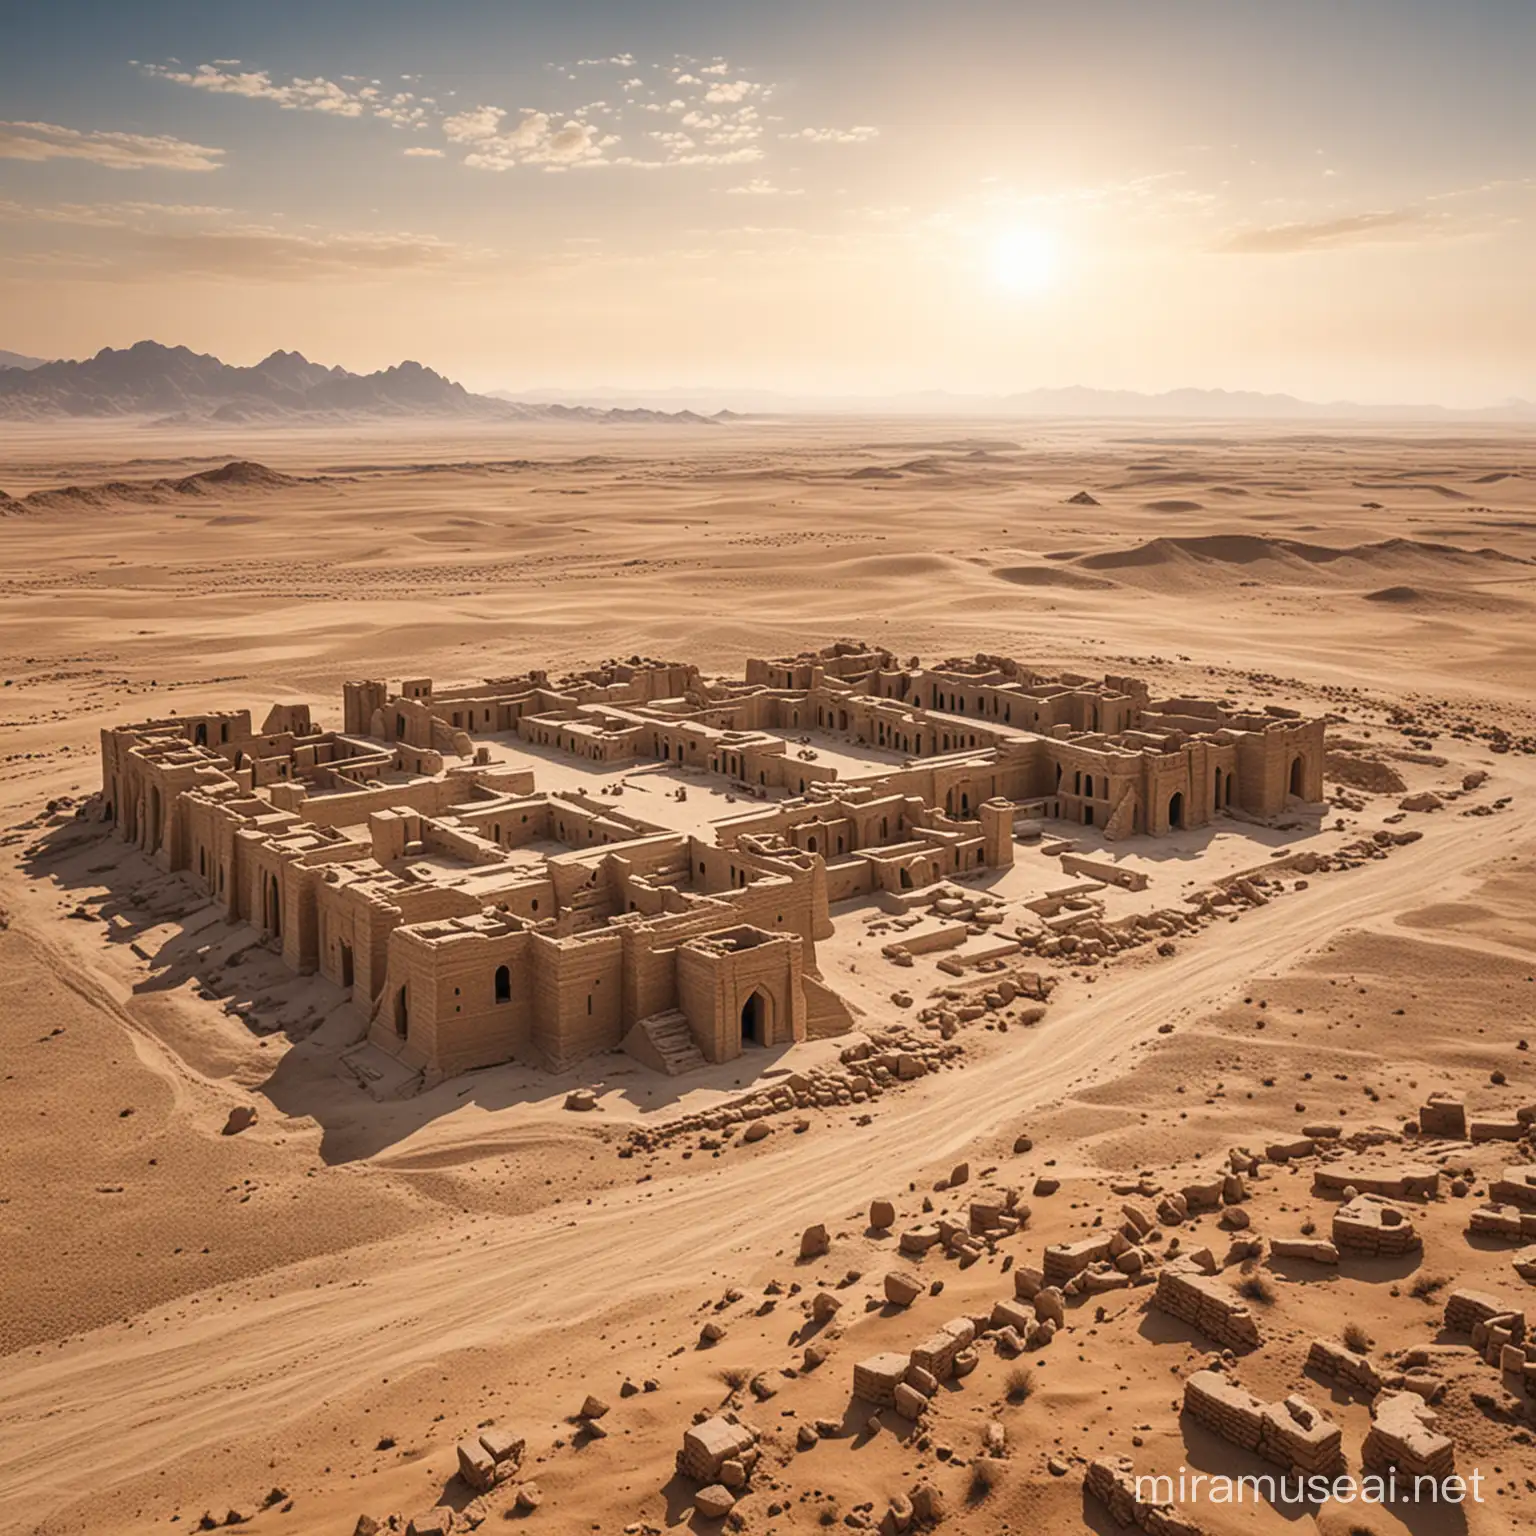 Ancient Persian ruins in a vast desert landscape
